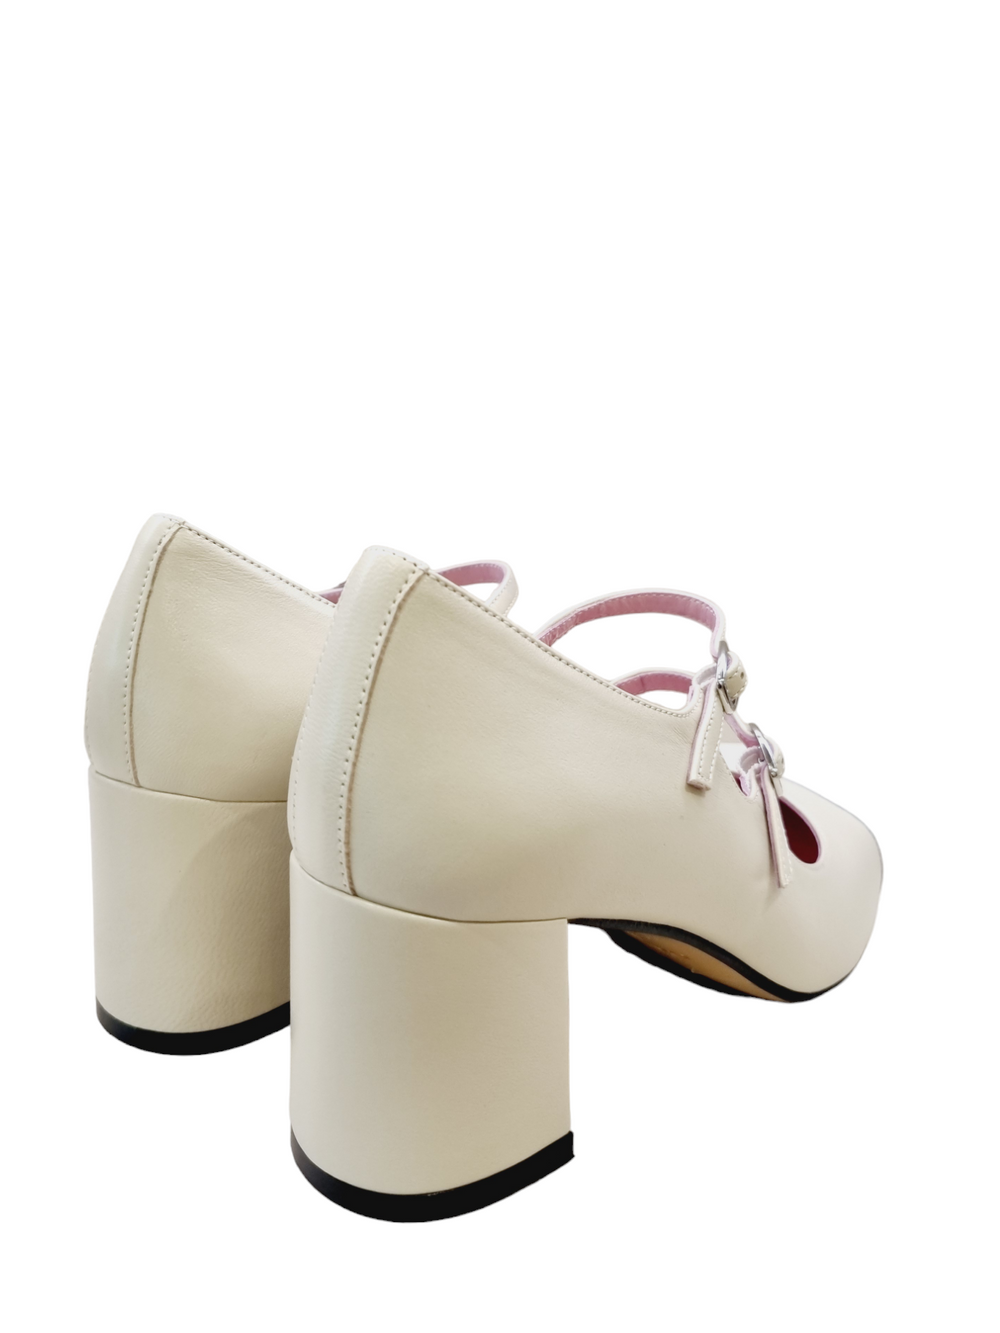 Cherry Mary Jane Pump - Carel Paris - Liberty Shoes Australia